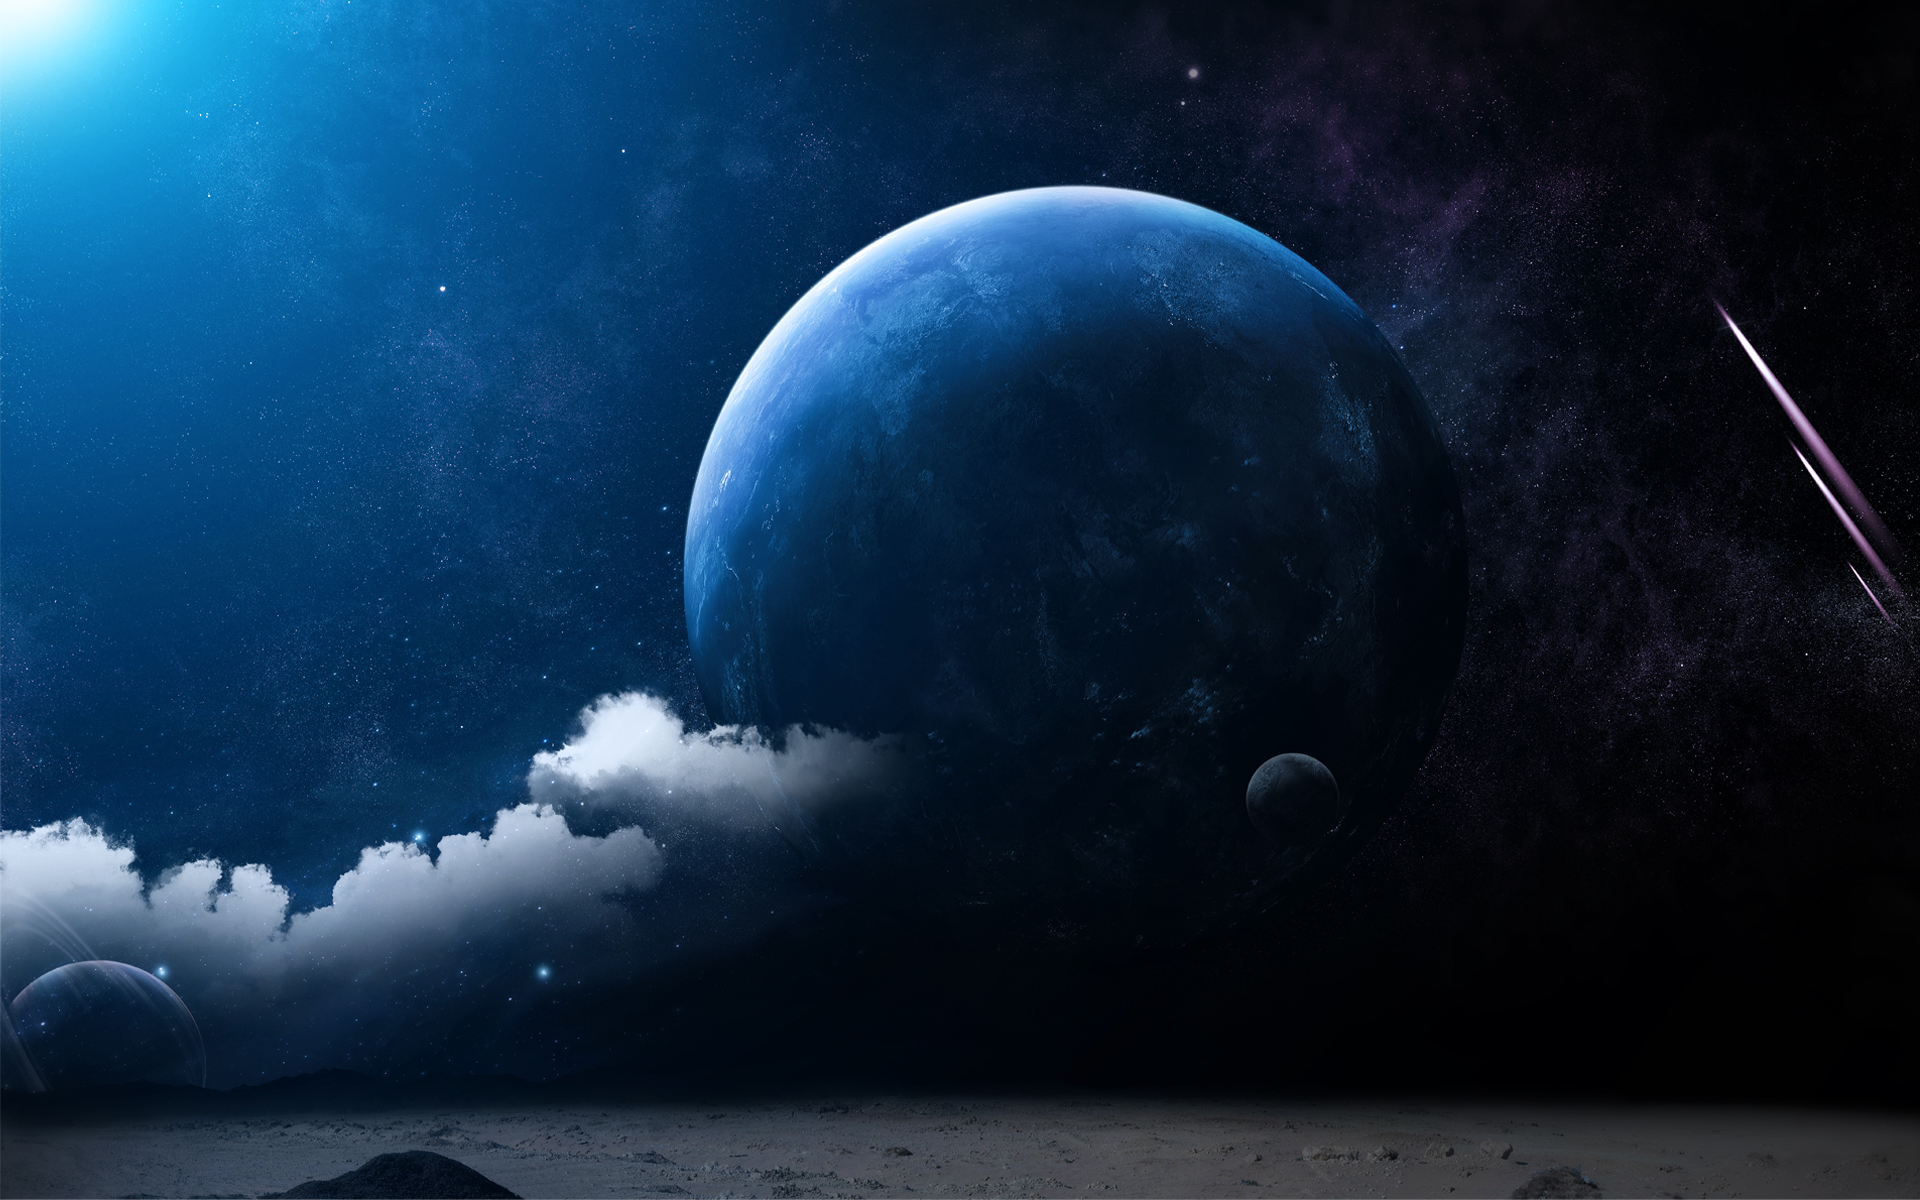 Скачать картинку Небо, Планеты, Облака, Синий, Планета, Комета, Научная Фантастика в телефон бесплатно.